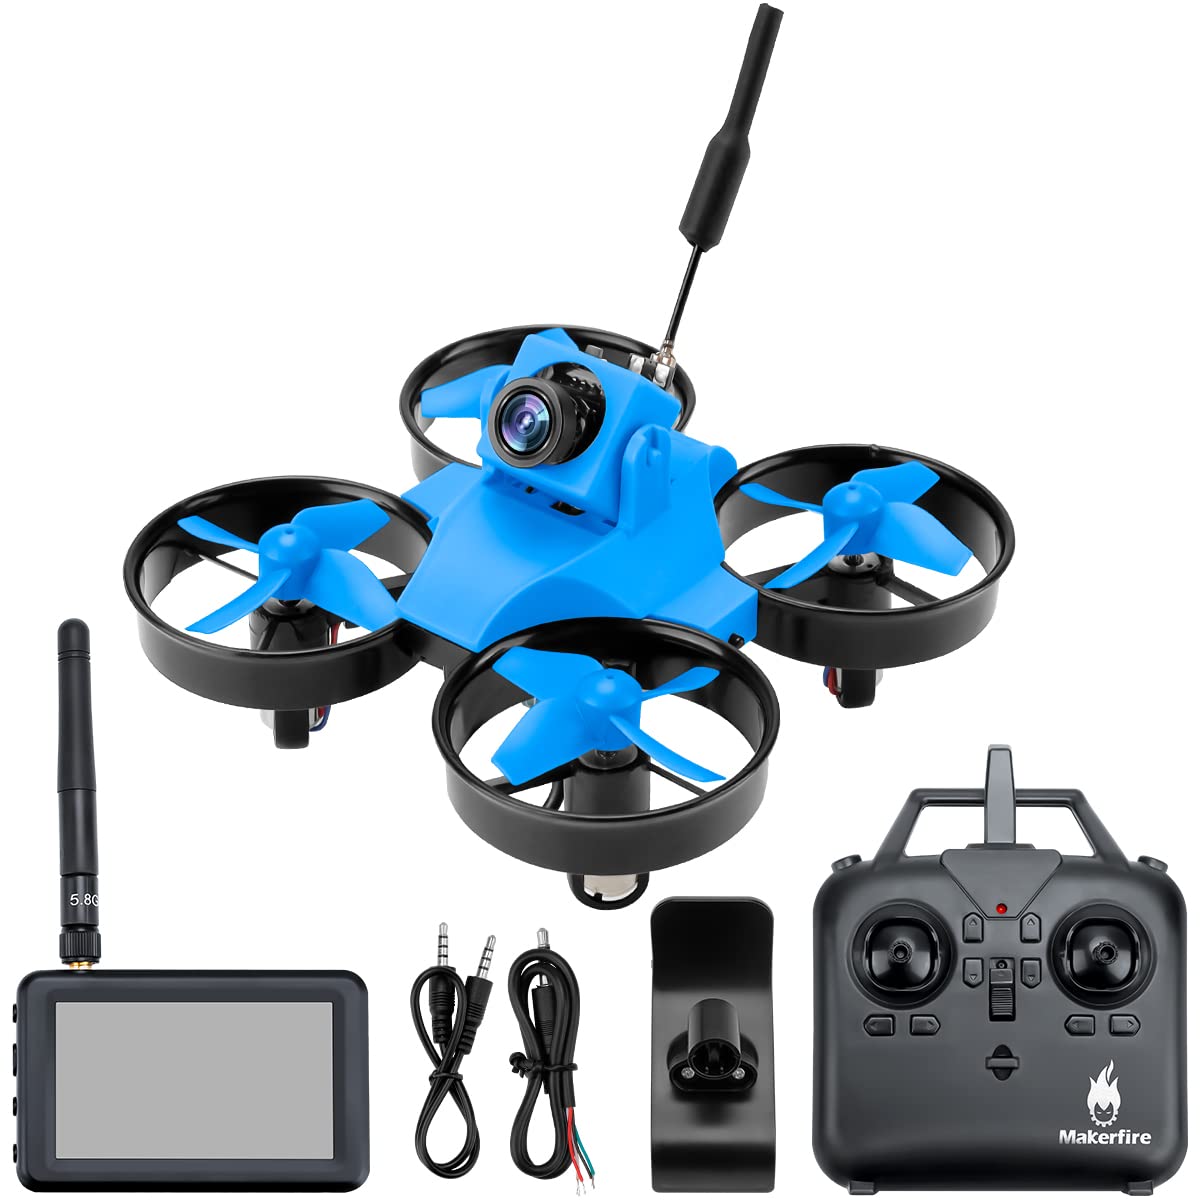 Makerfire FPV Drone Kit